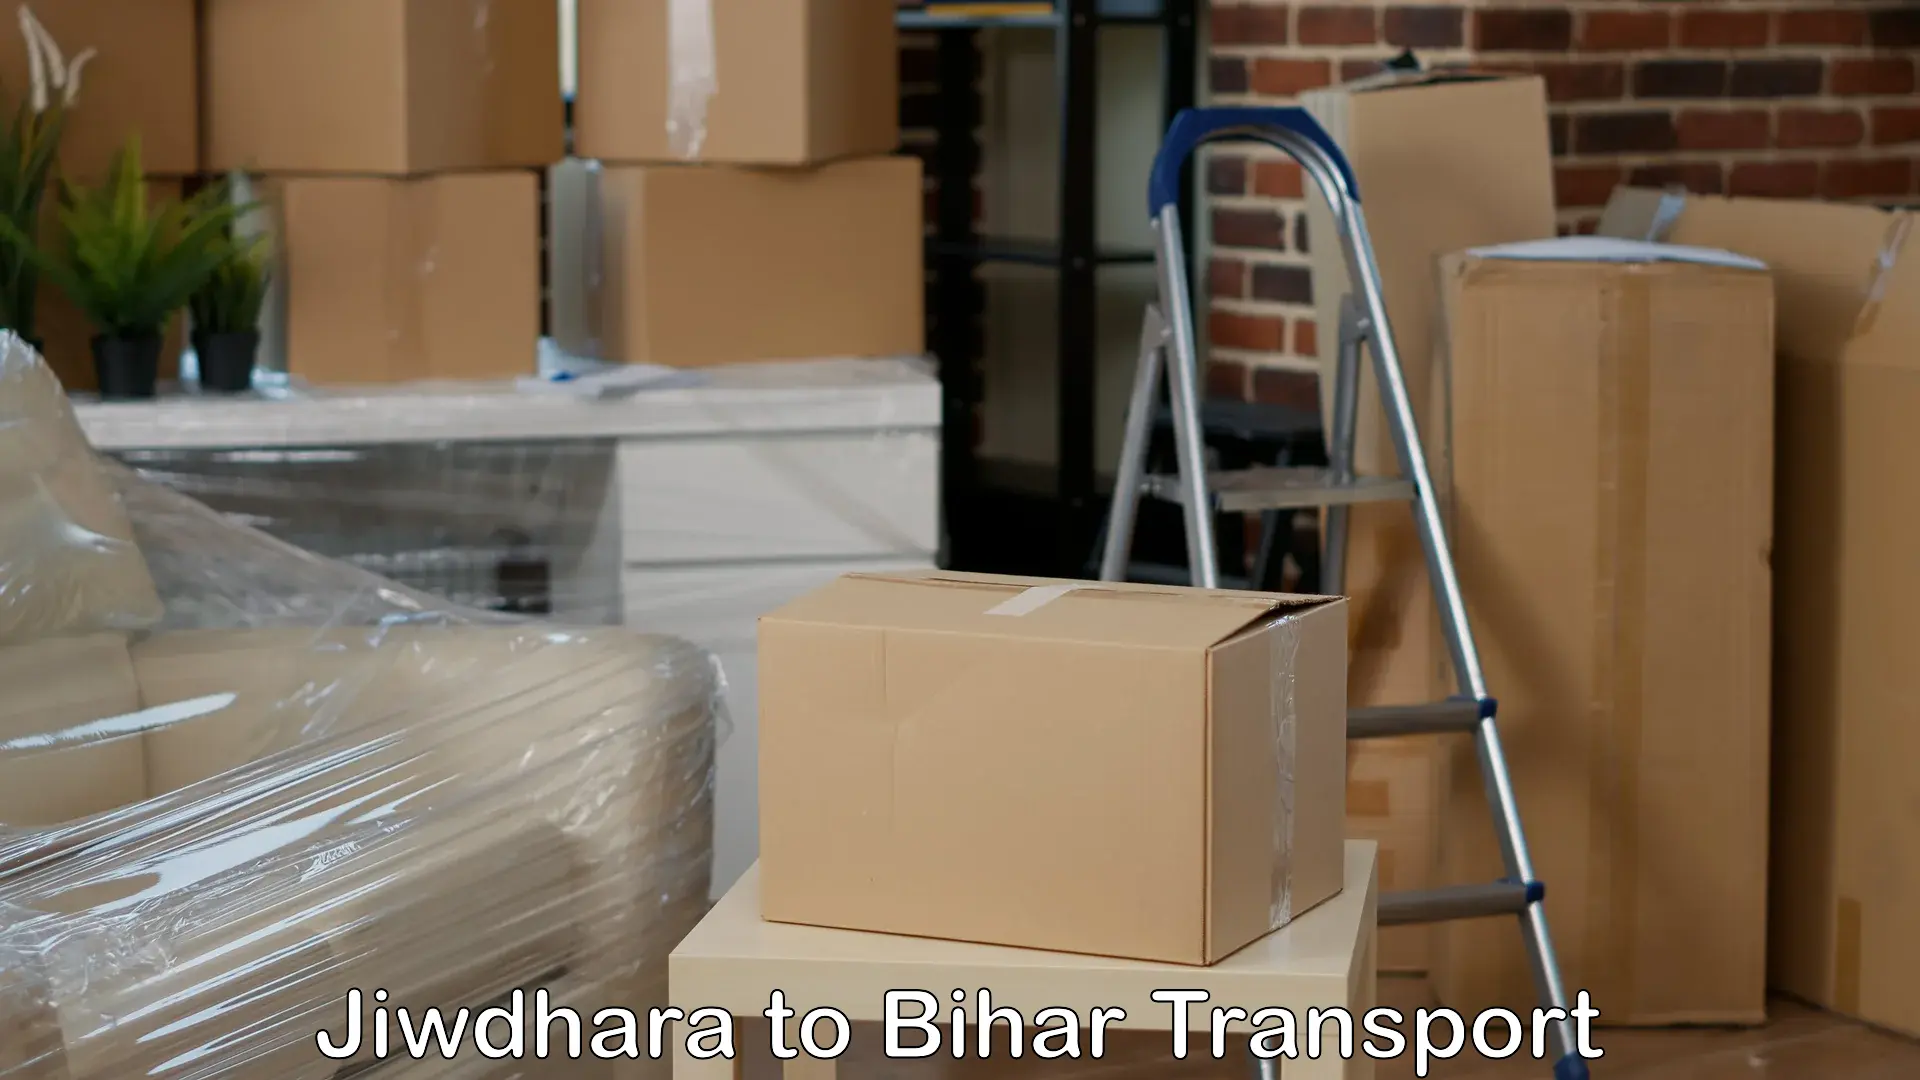 Truck transport companies in India Jiwdhara to Chainpur